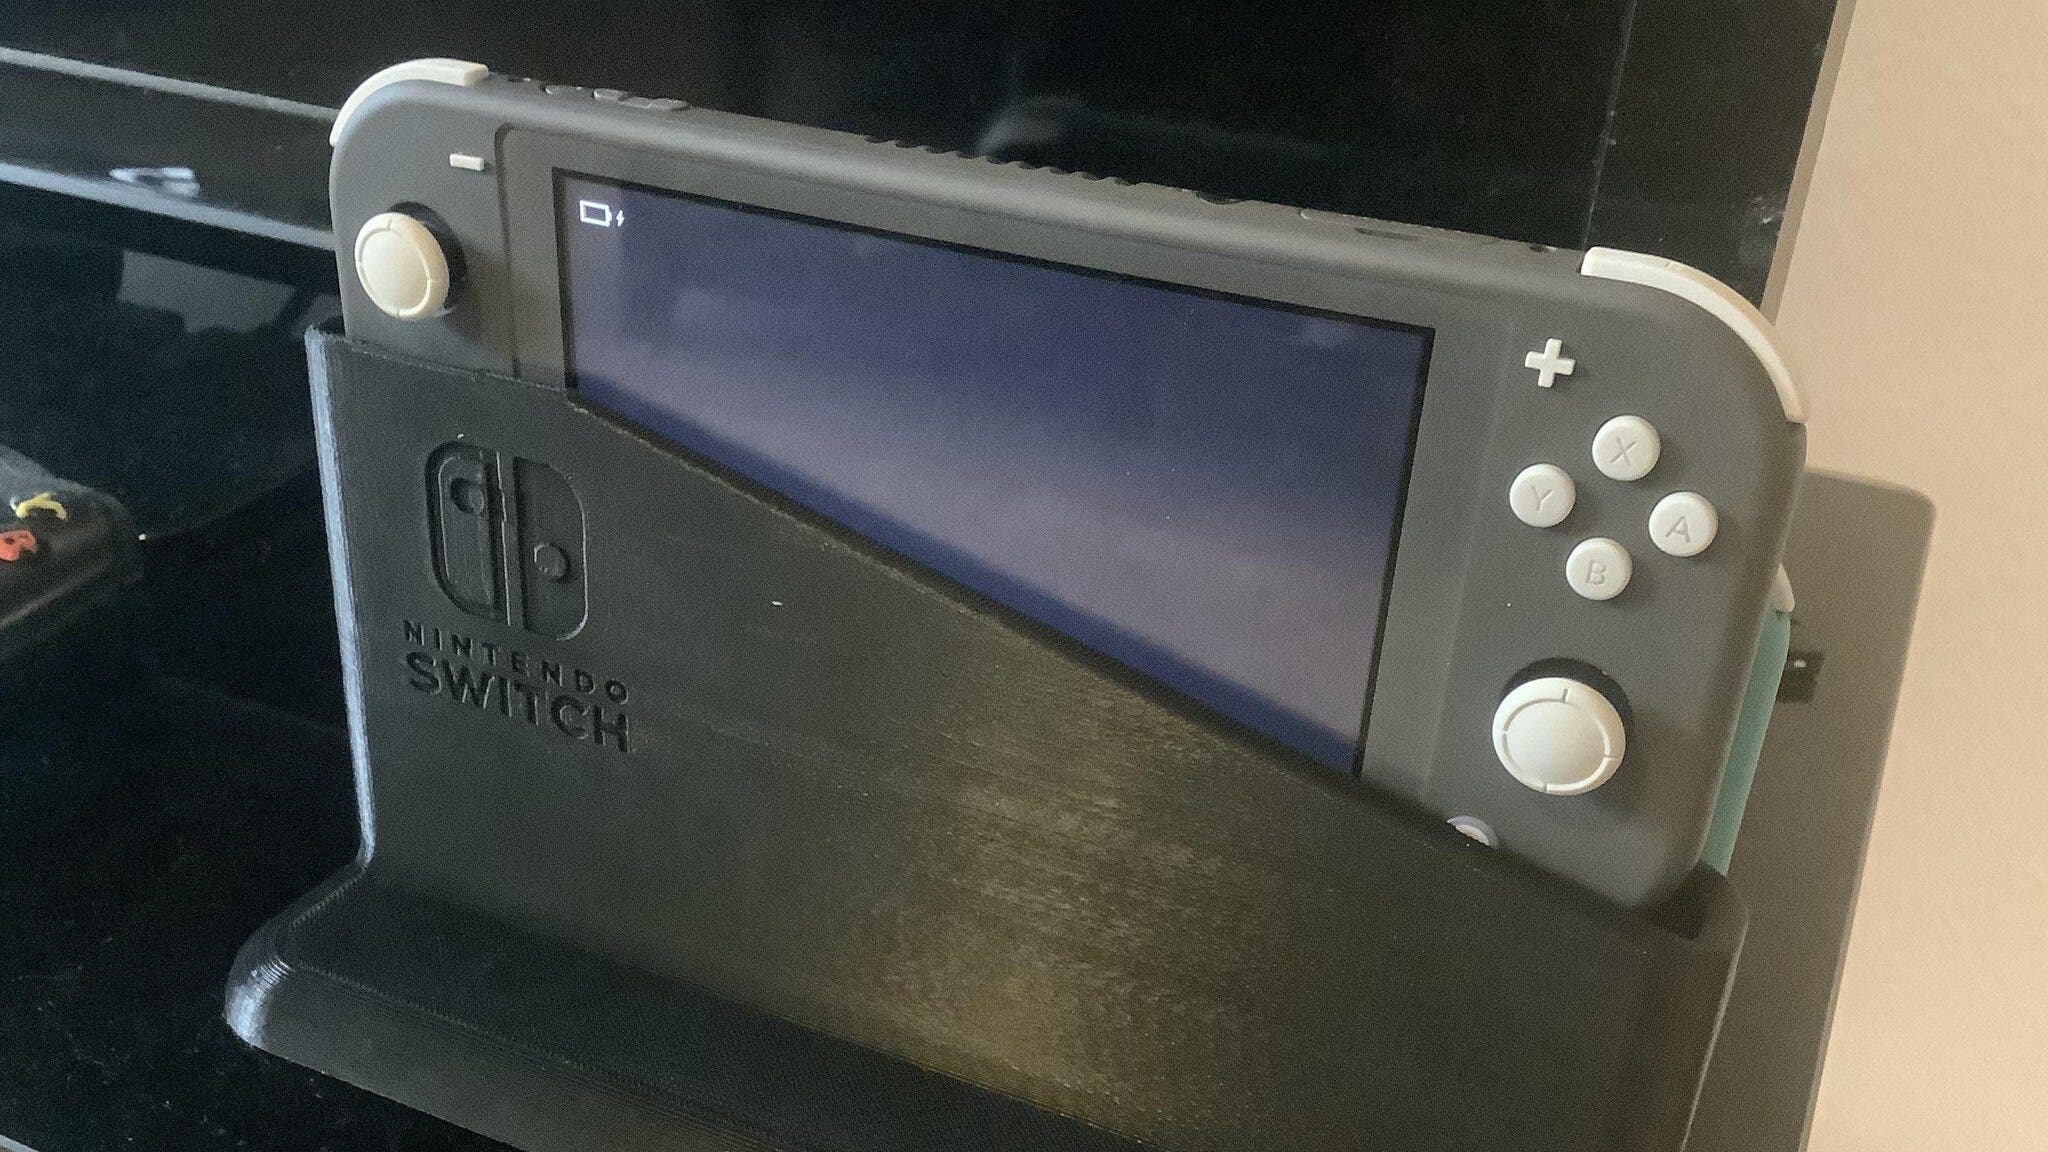 Usuario de Nintendo Switch Lite ha creado este curioso dock de carga para la consola